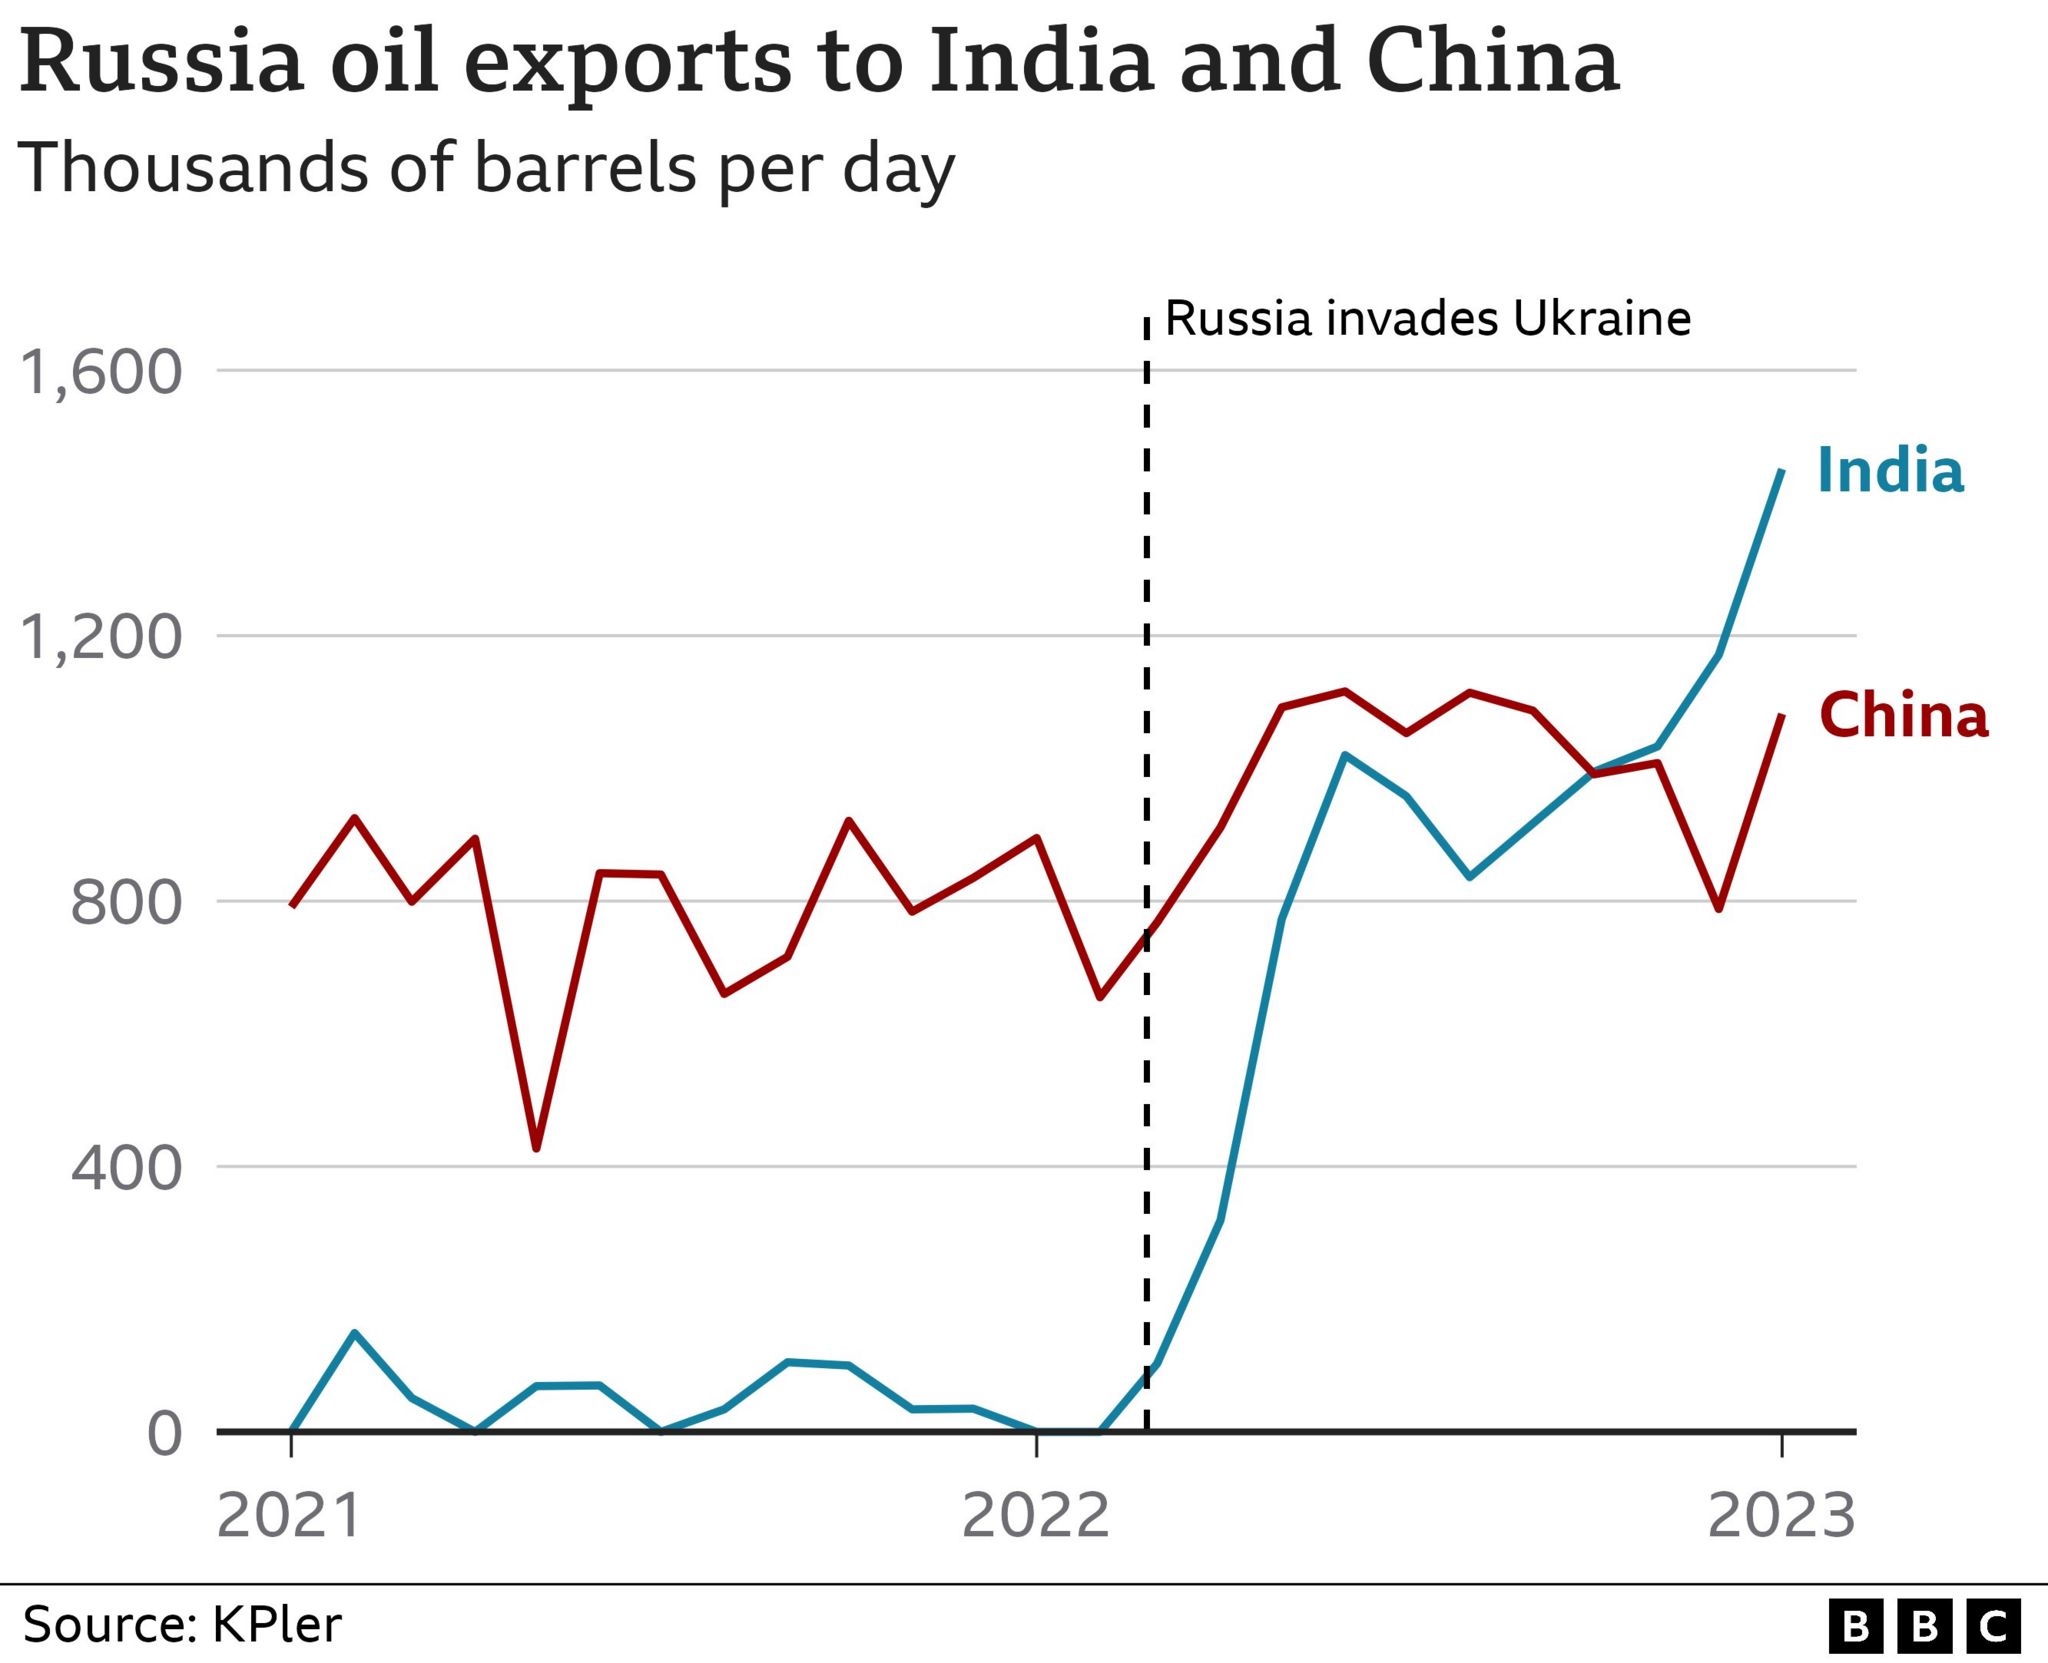 China and India imports